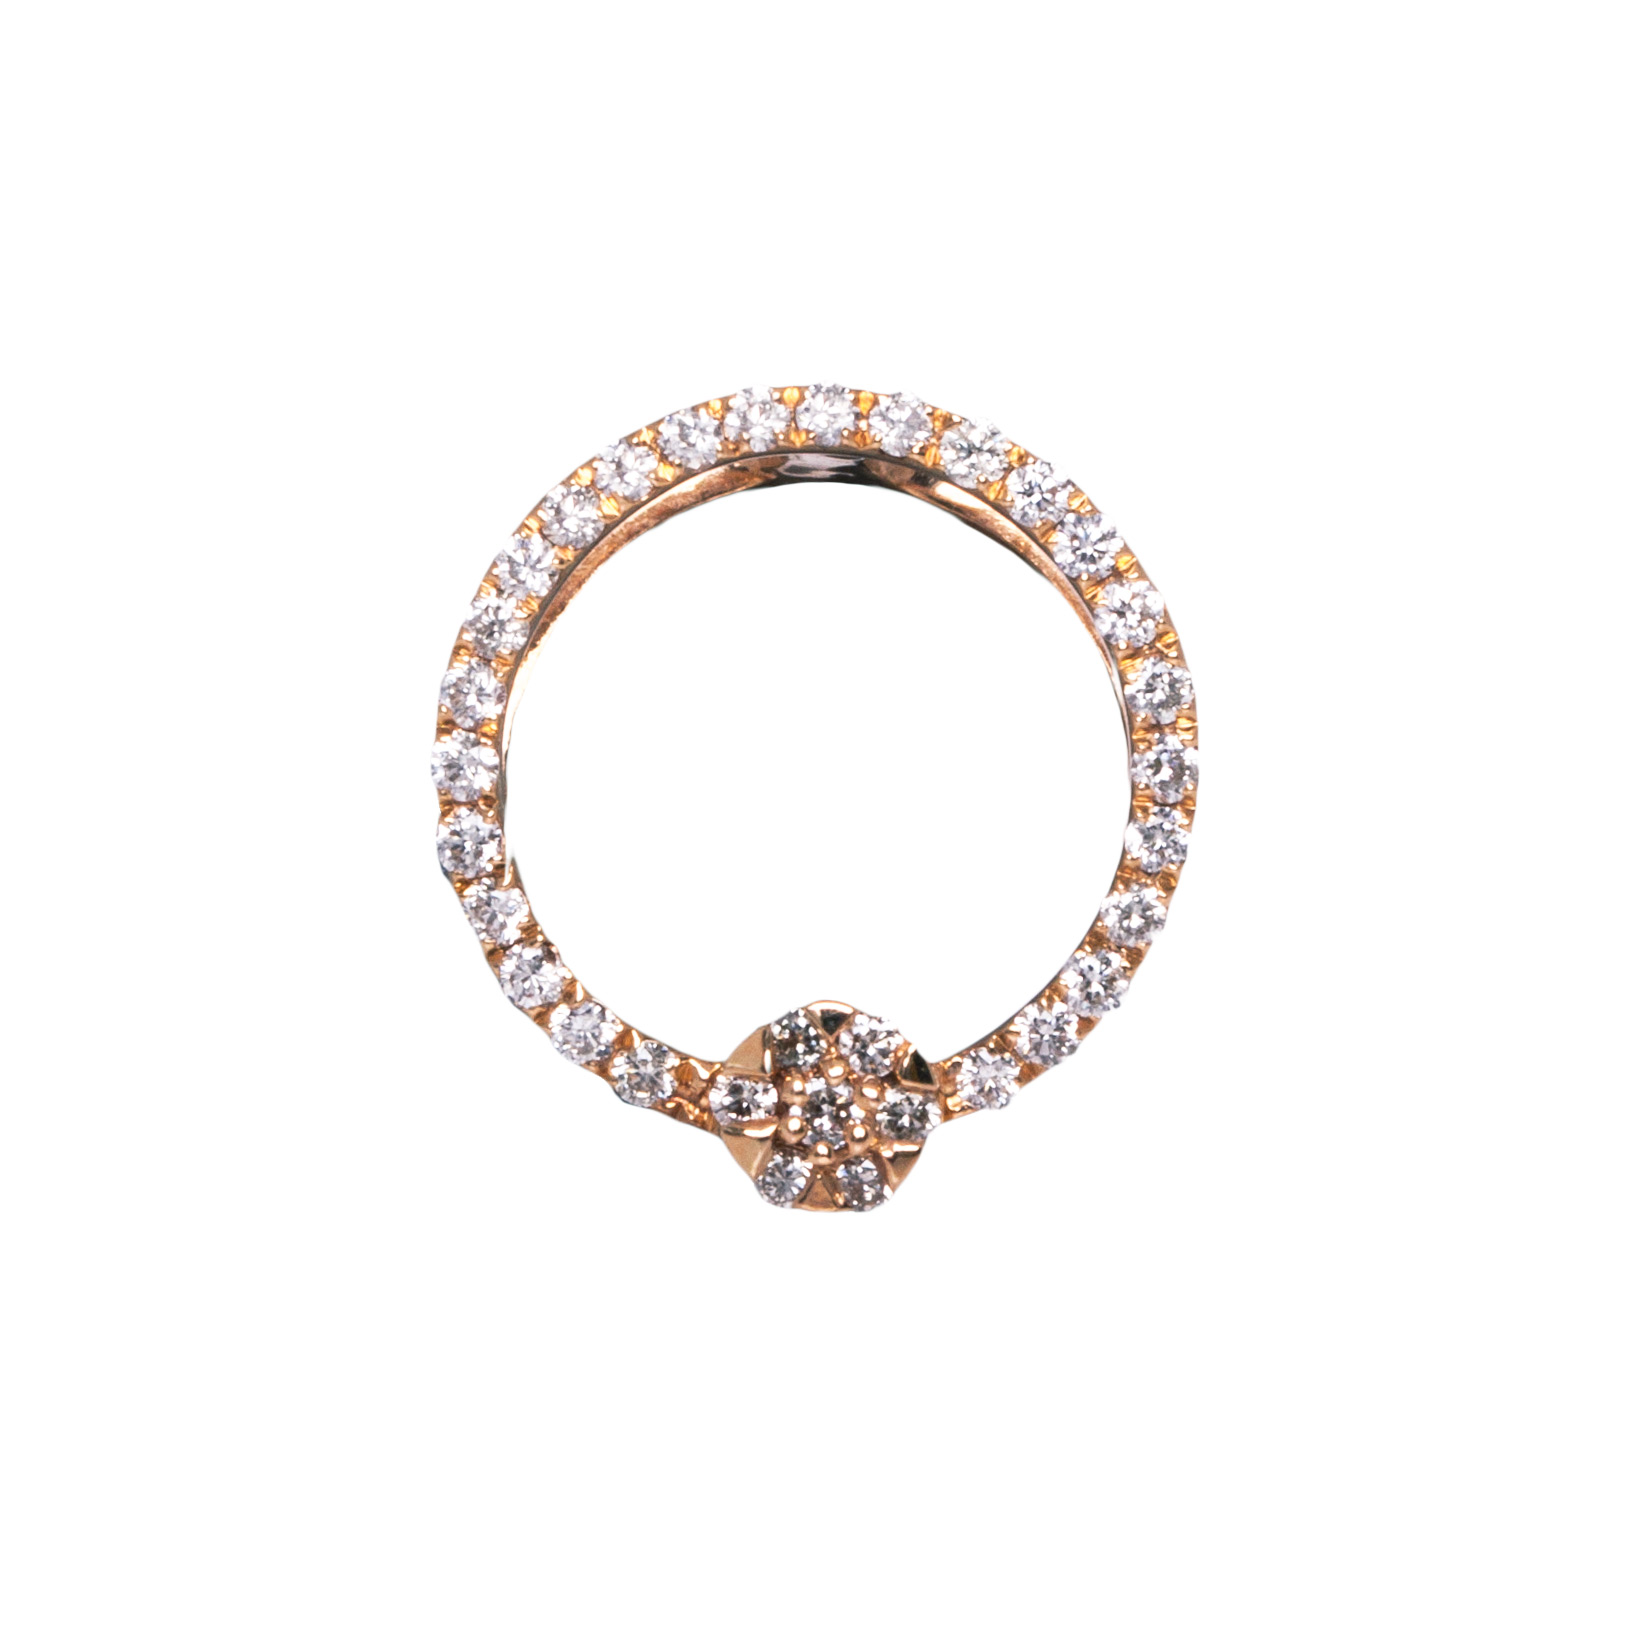 179-continental-jewels-manufacturers-pendant-cjp000179-18k-yellow-gold-vvs1-diamonds-customised-round-pendant.jpg